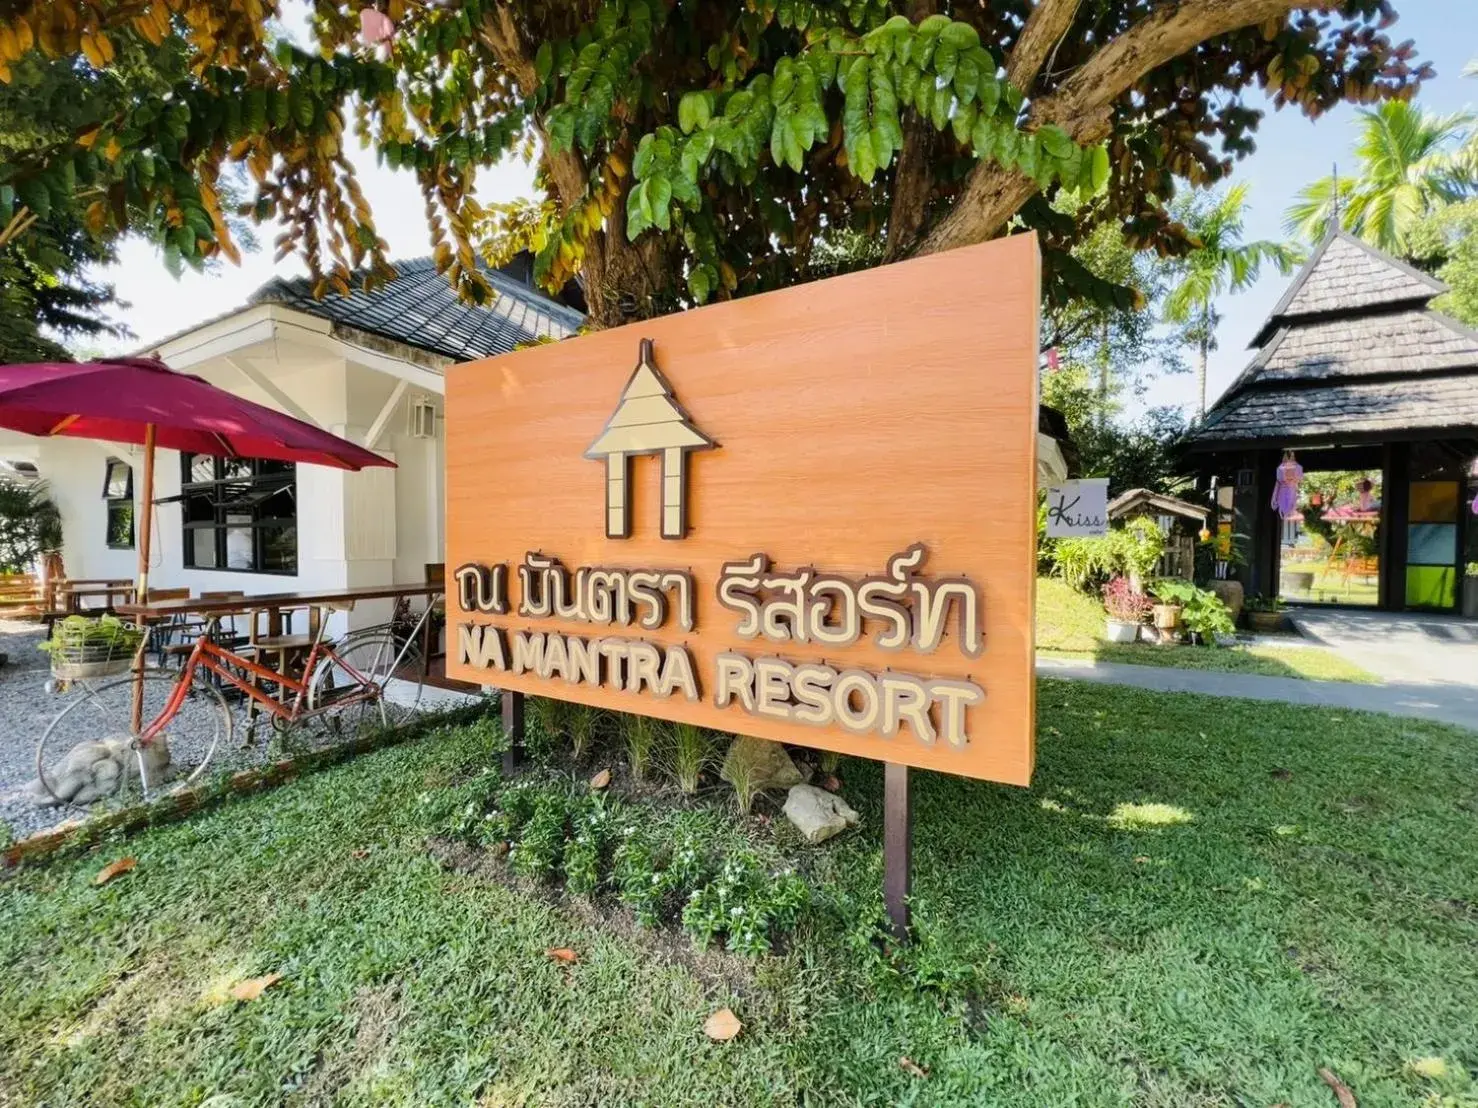 Property logo or sign in Na Mantra Resort